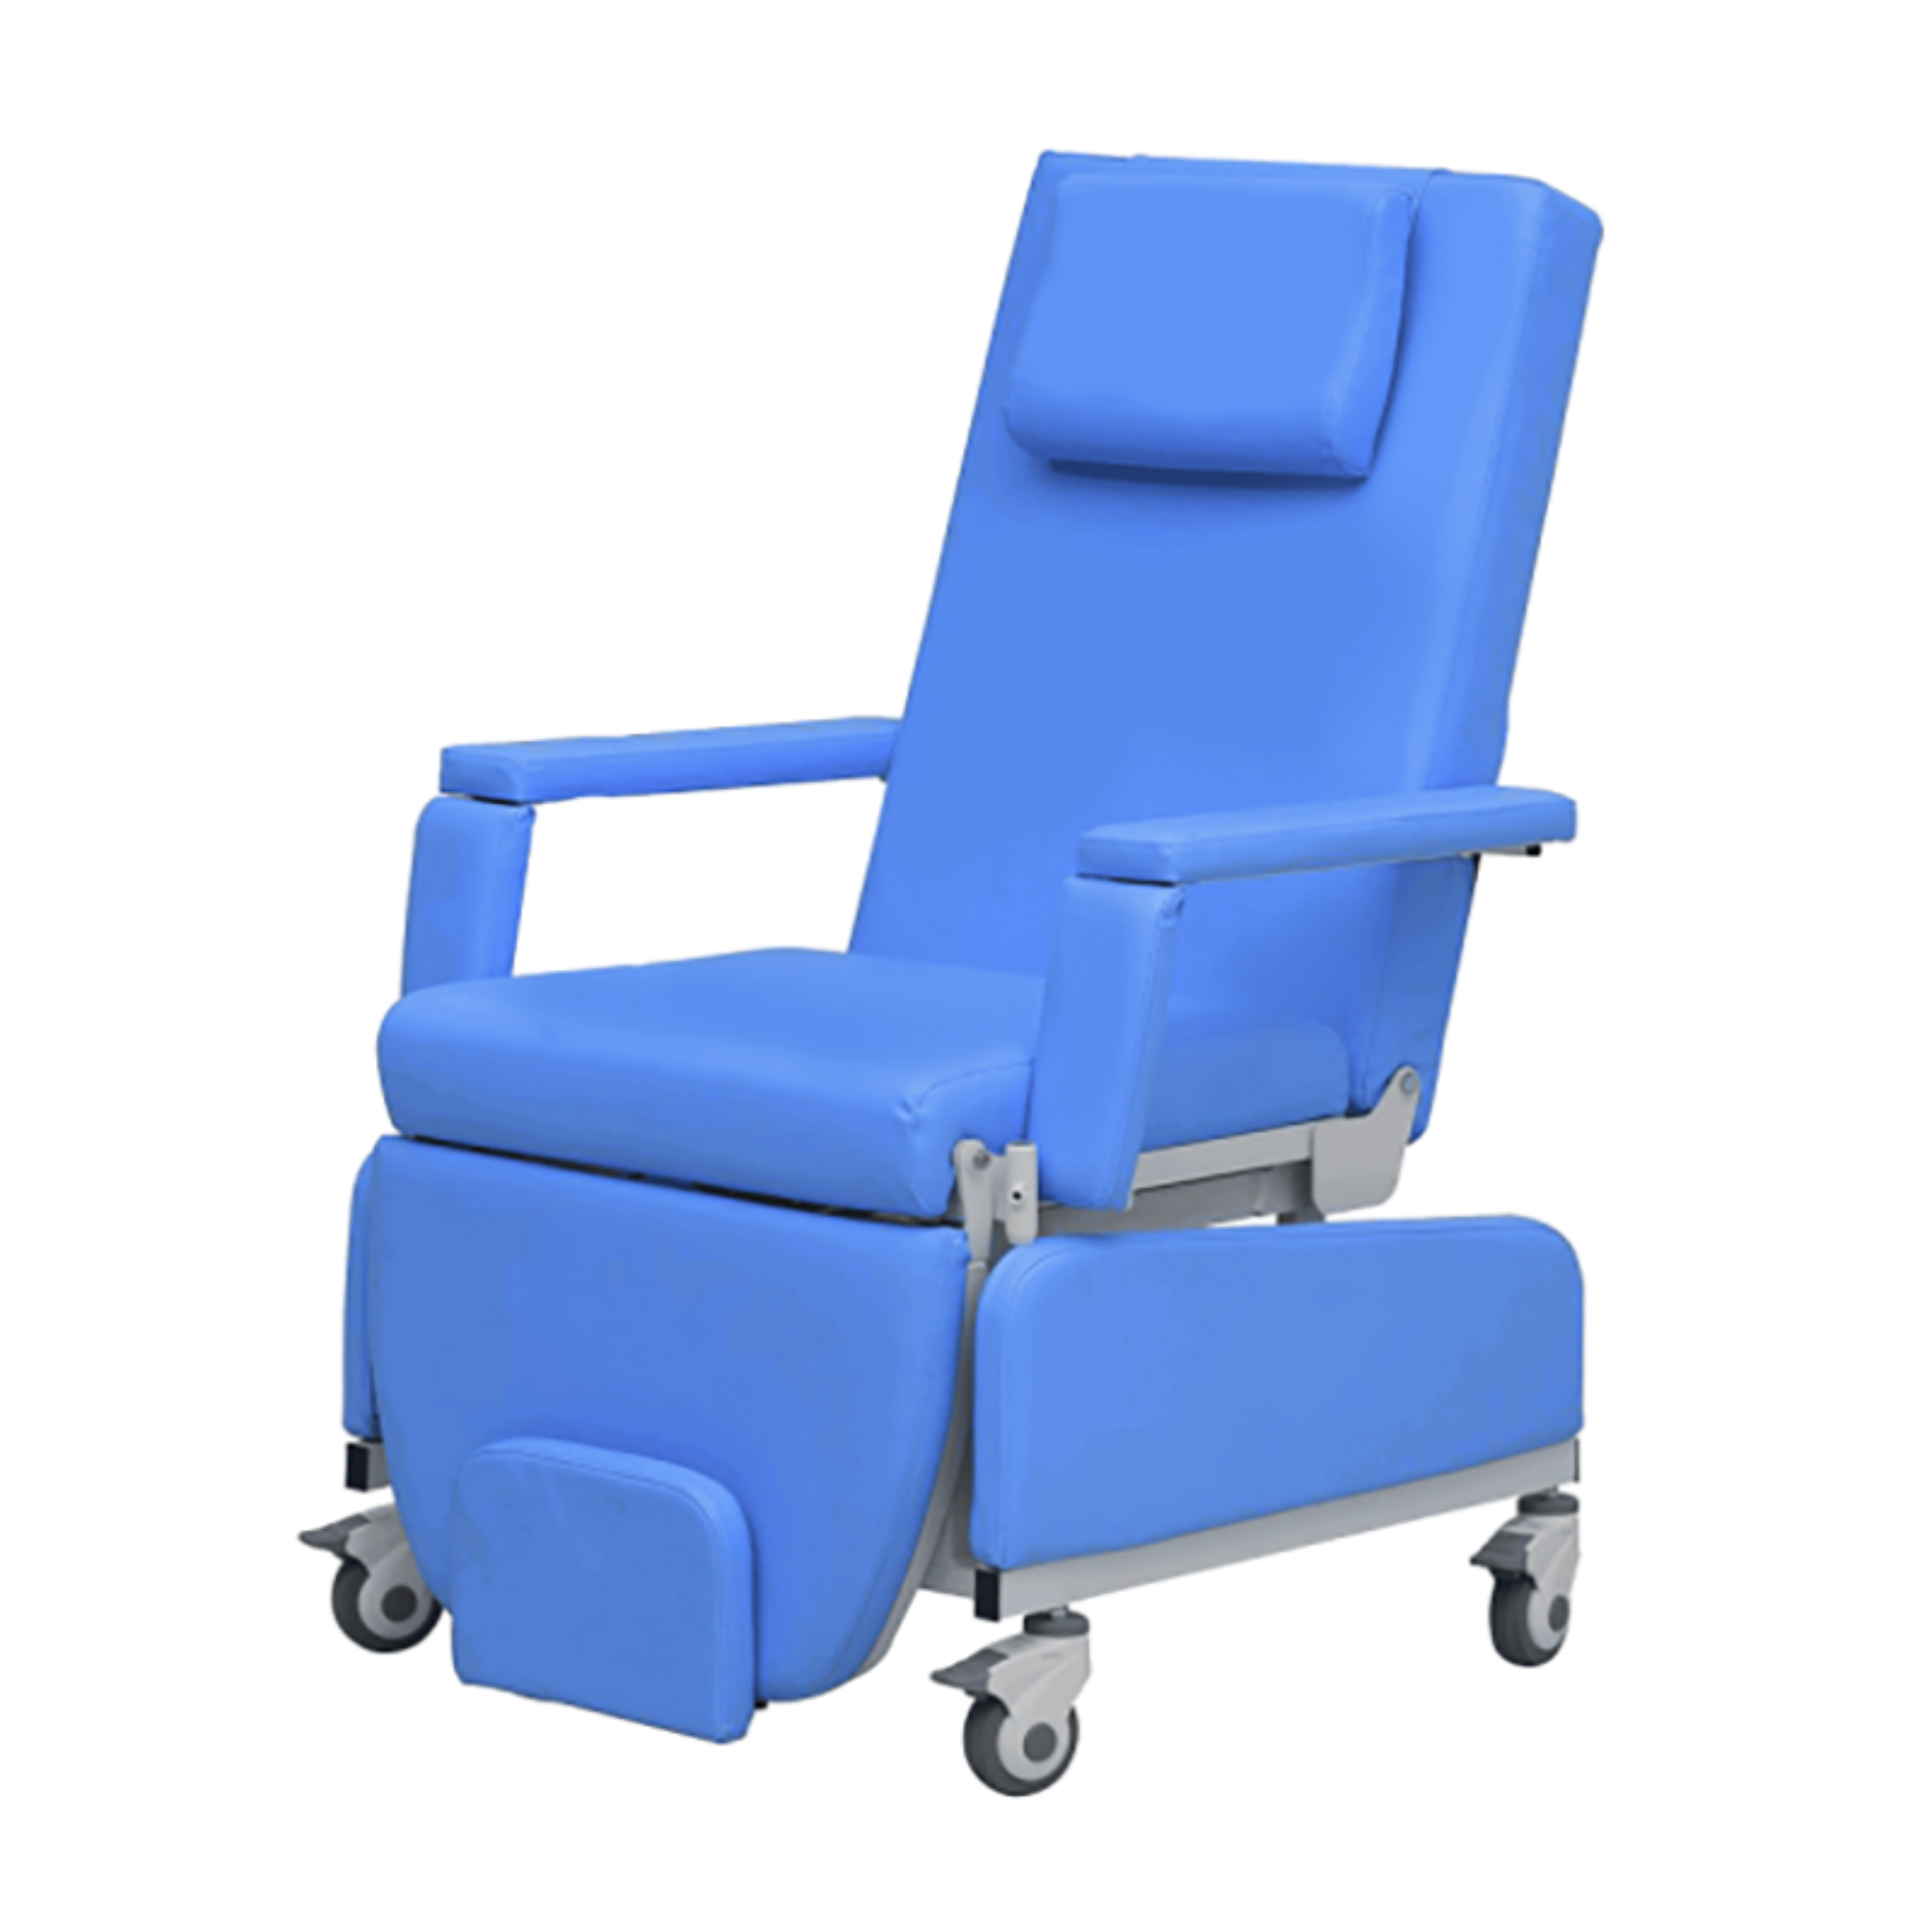 YFY-D02 Electric Dialysis Chair